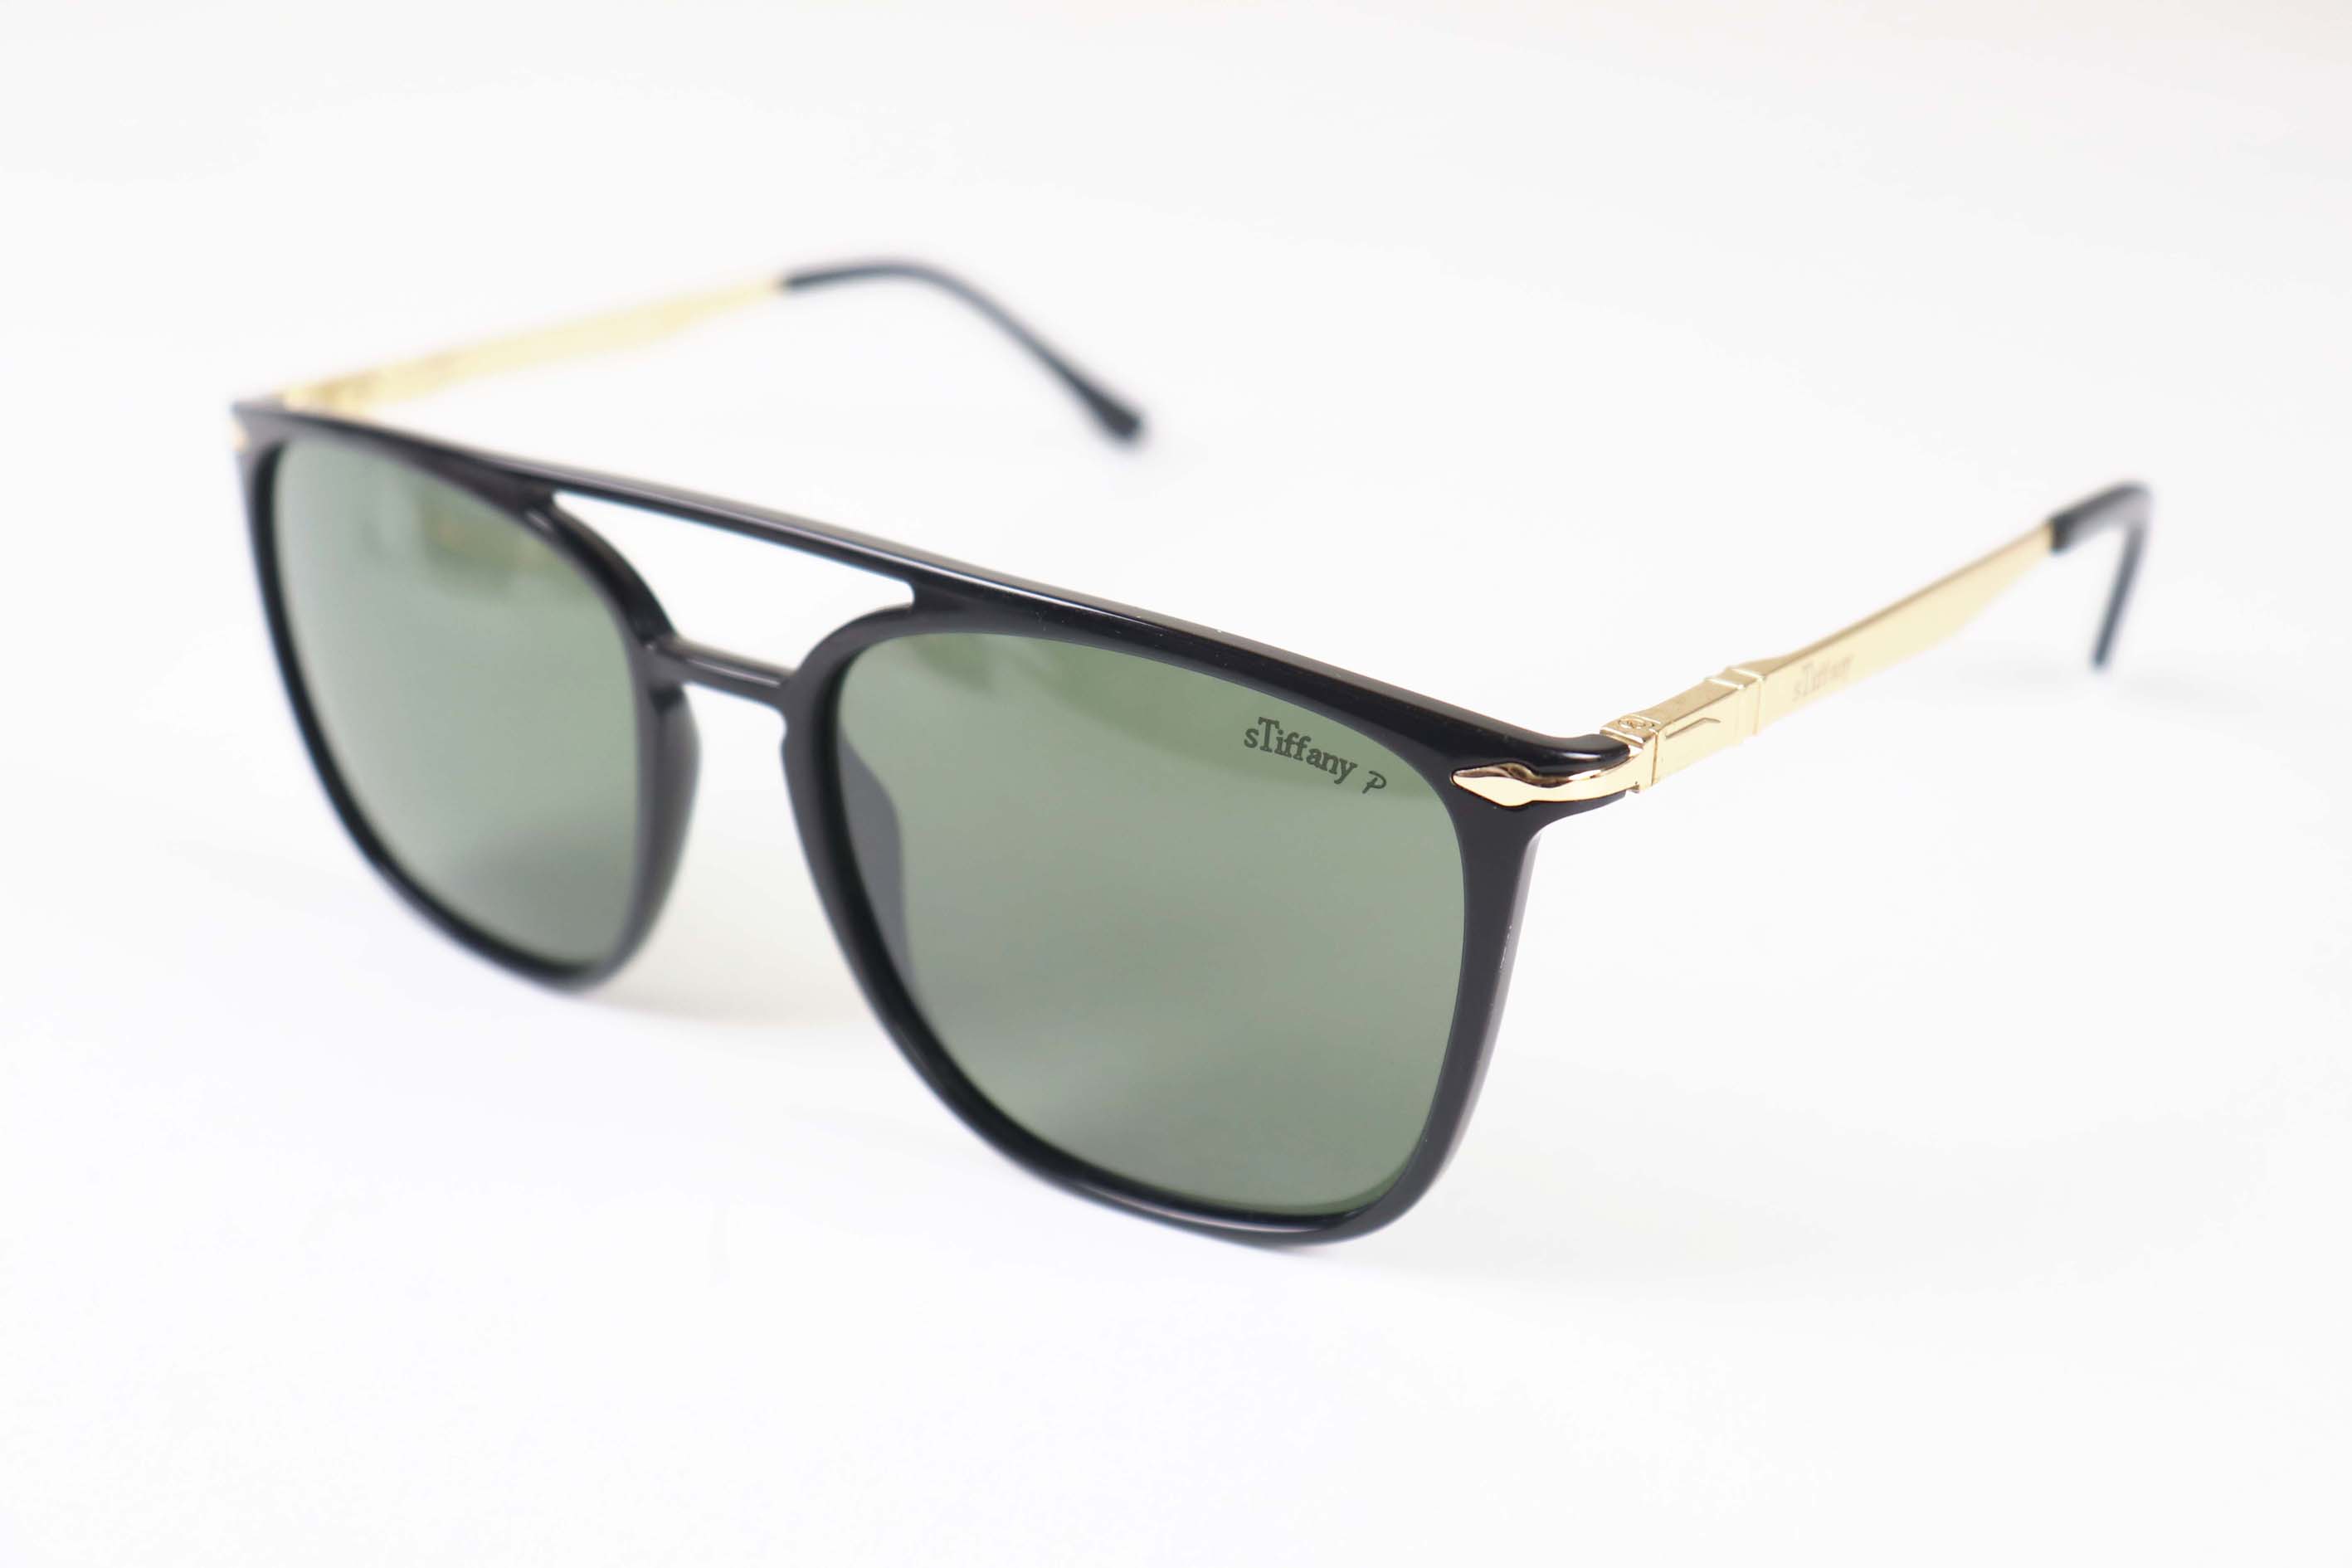 Stiffany Sunglasses-OR-OAK19037-C6-S